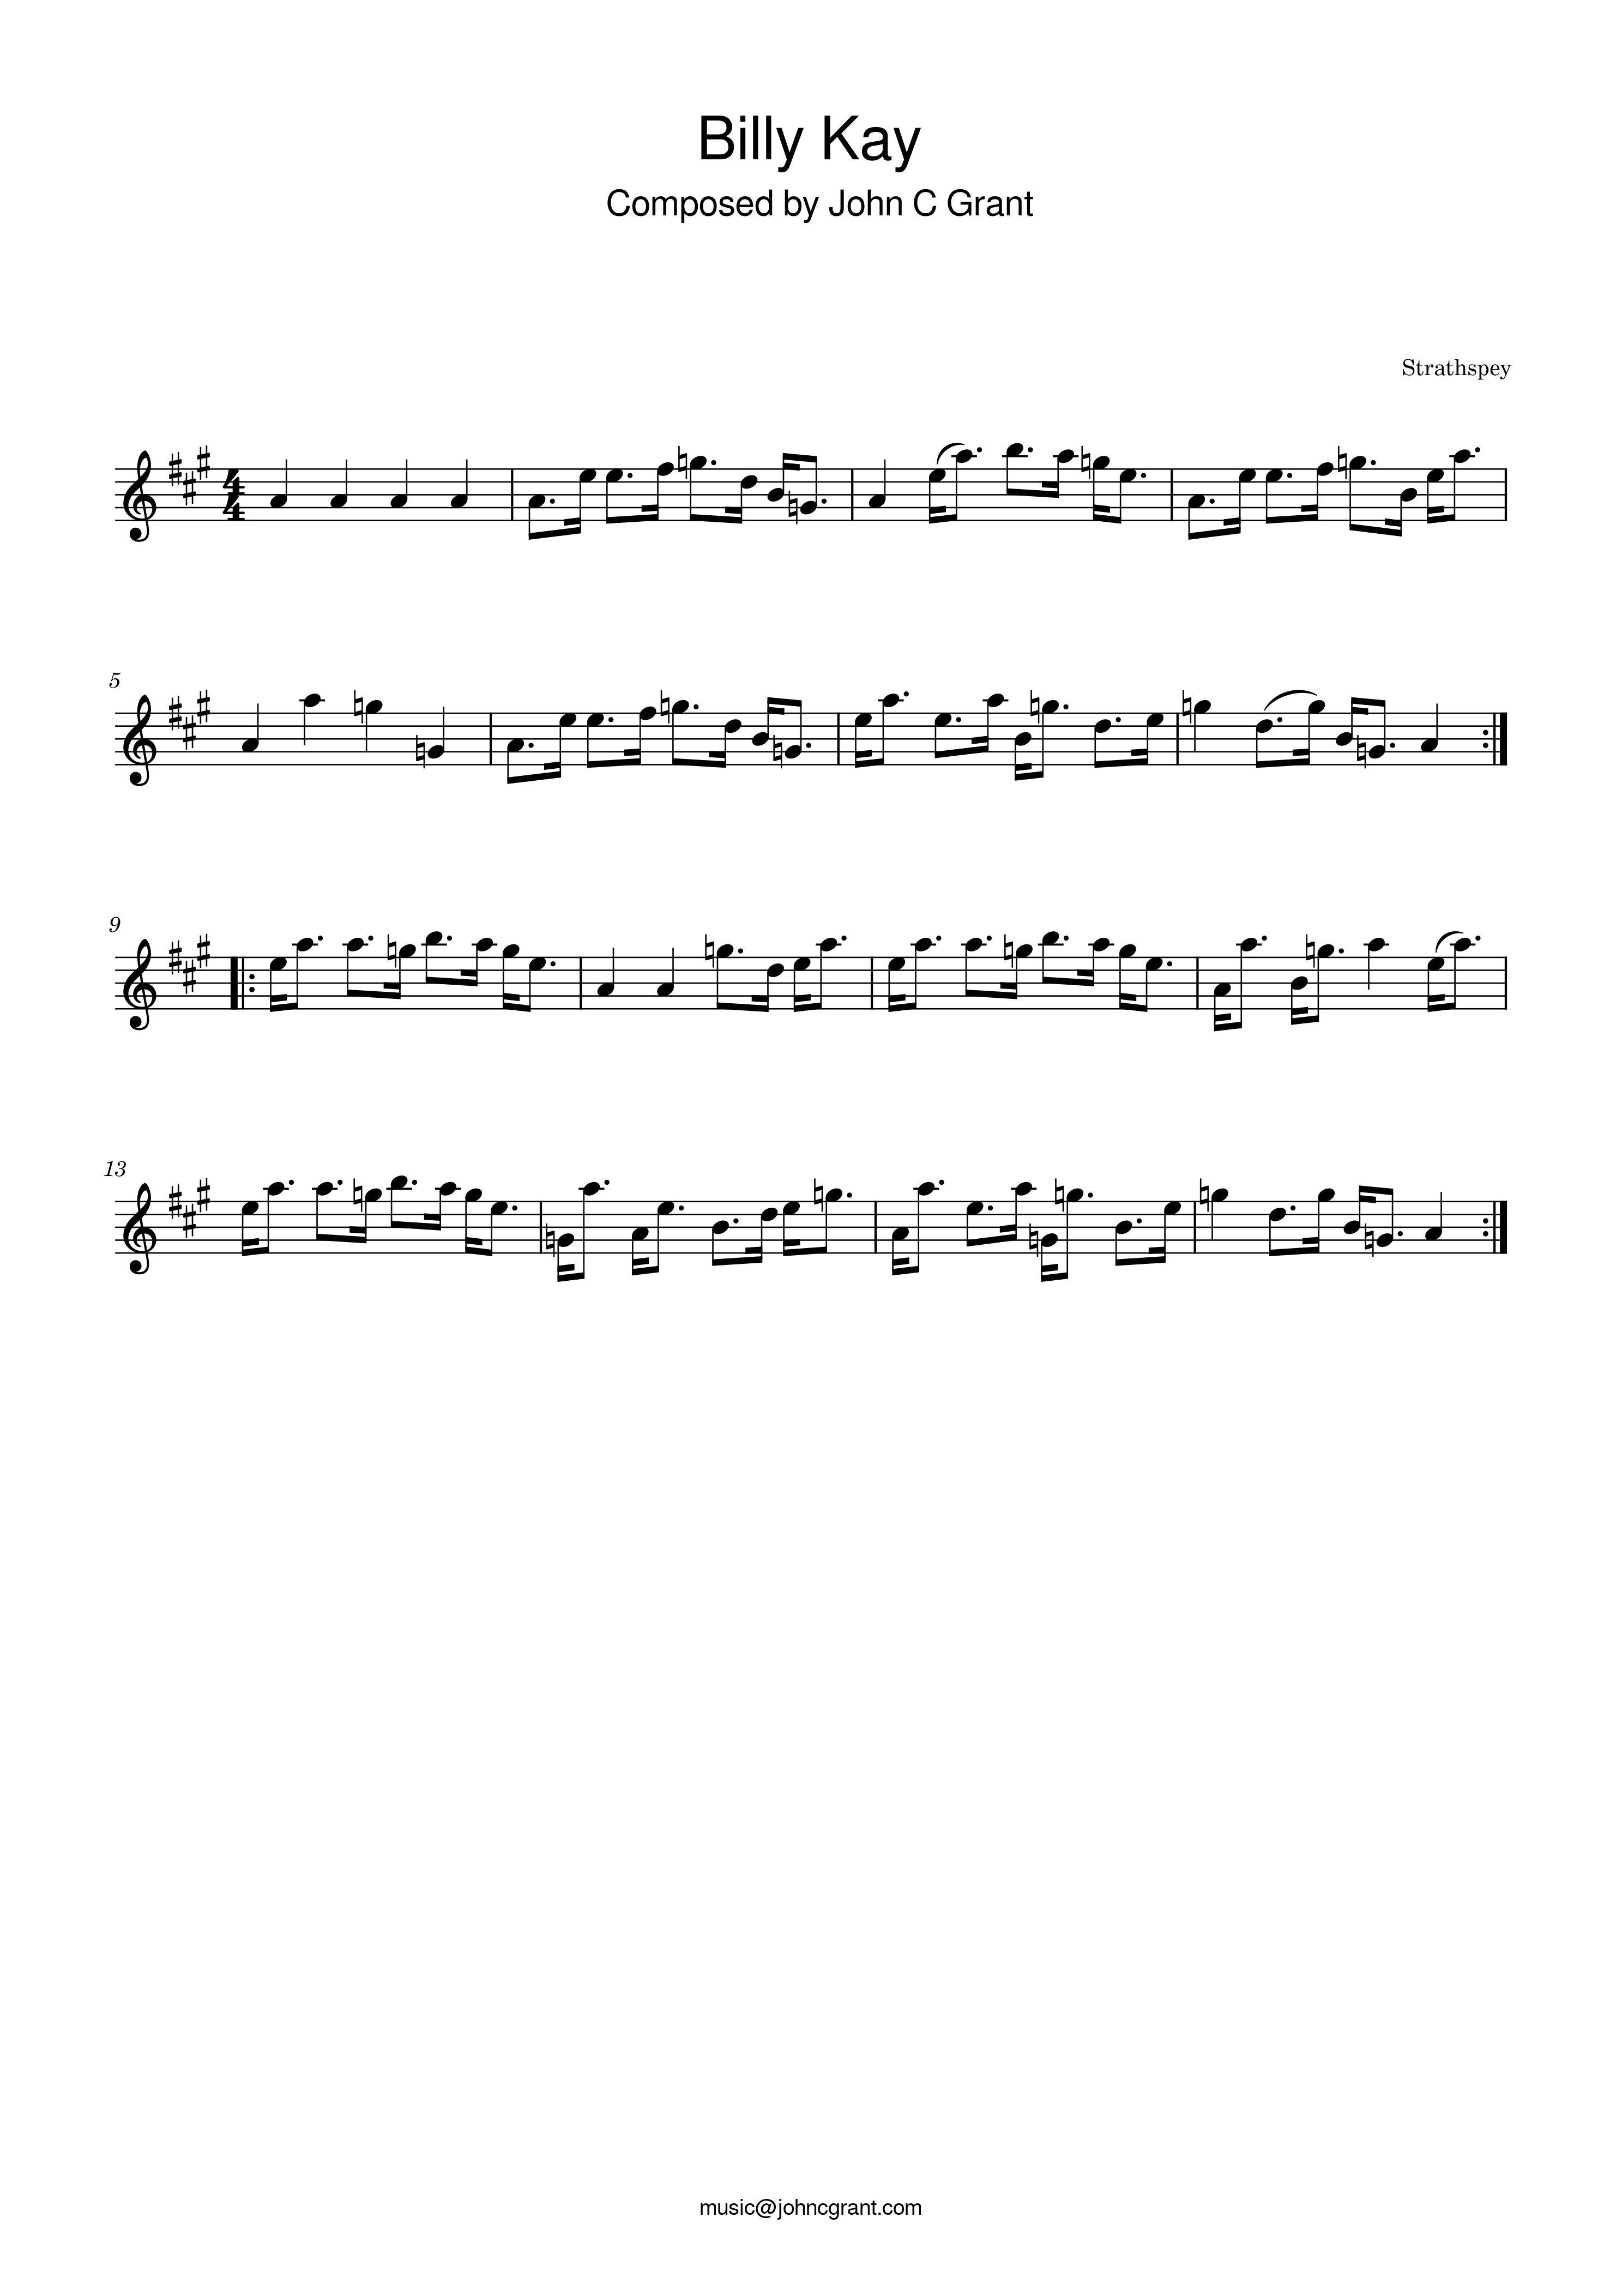 Billy Kay - Composed by John C Grant (https://johncgrant.com). Traditional composer from Kilmarnock, Ayrshire, Scotland.